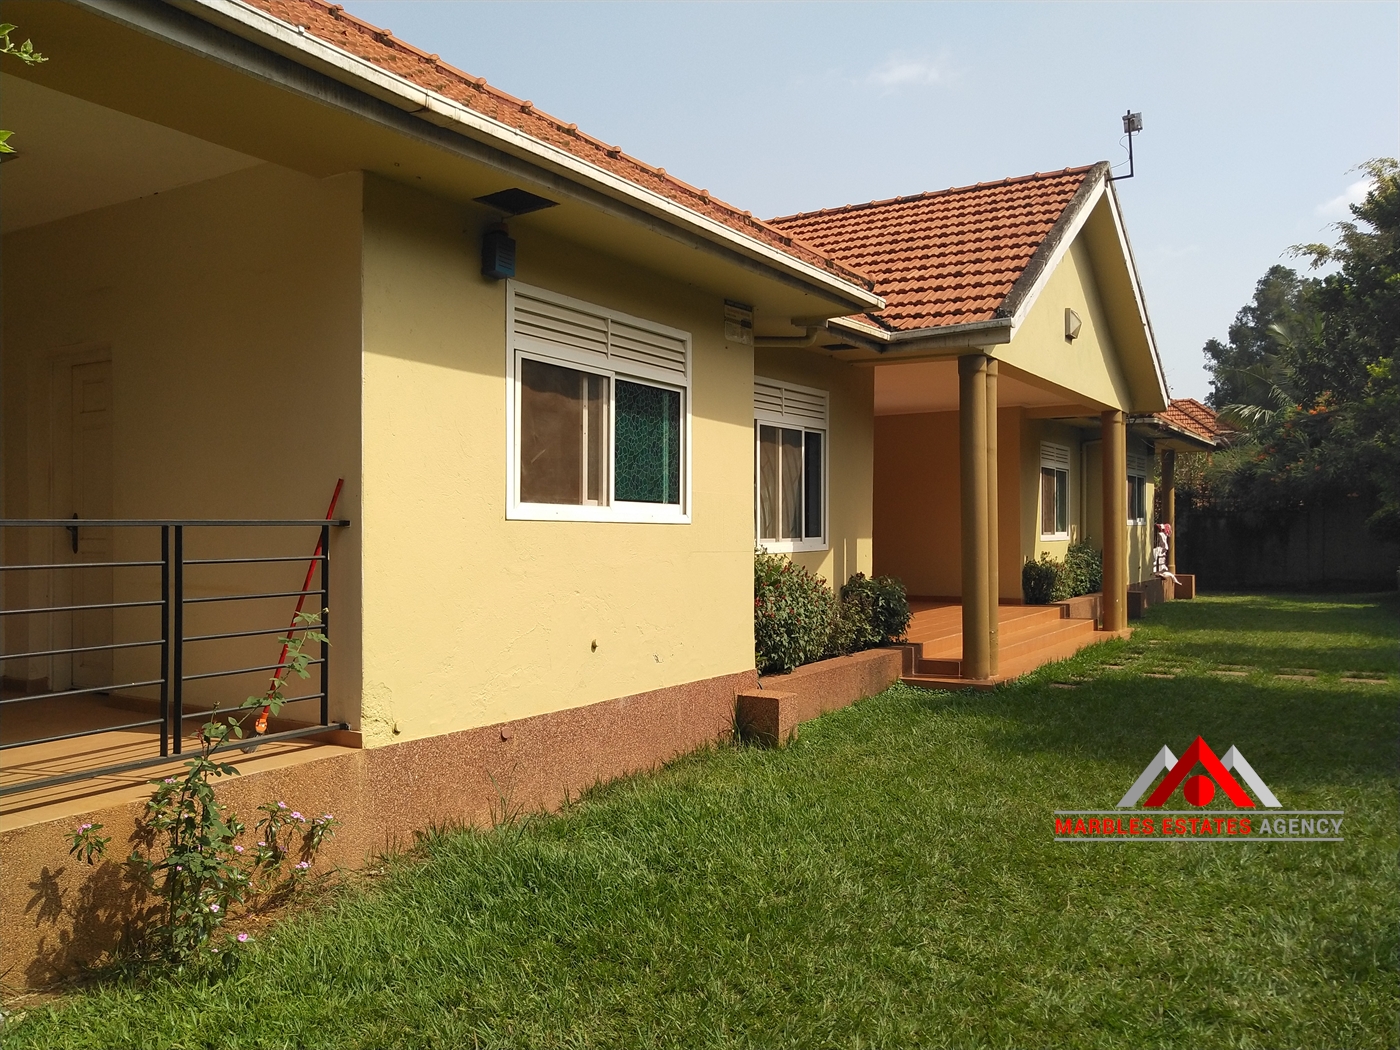 3 Bedroom House For Rent In Naguru Kampala Uganda Code 15 09 22